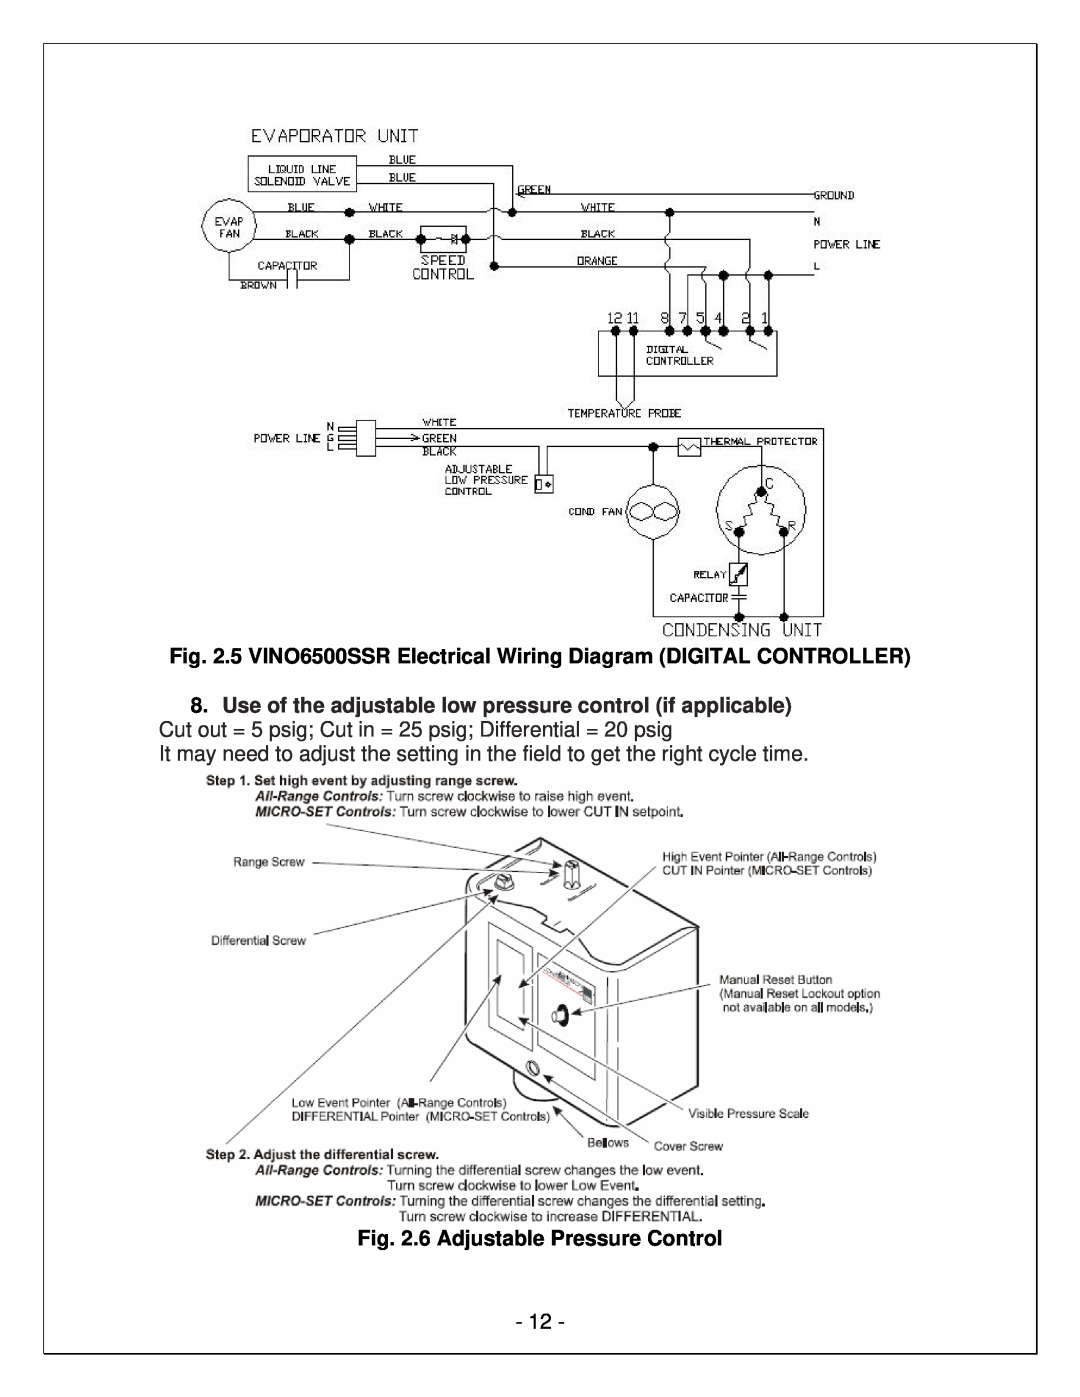 Vinotemp VINO2500-6500SSR, VINO2500-4500SSR, VINO2500-2500SSR manual 6 Adjustable Pressure Control 